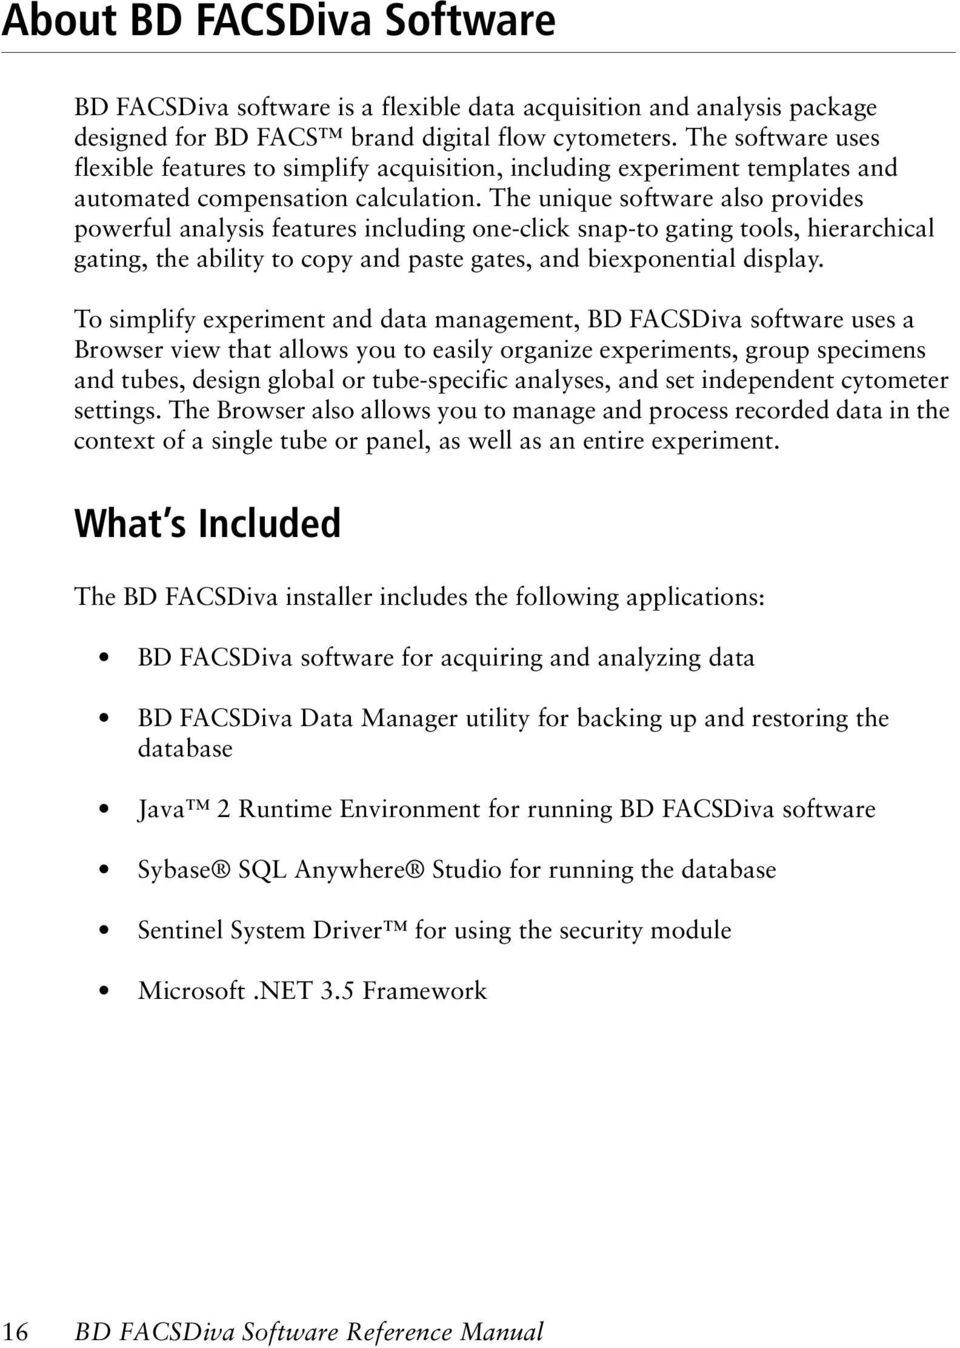 Bd facsdiva software 8.0 reference manual